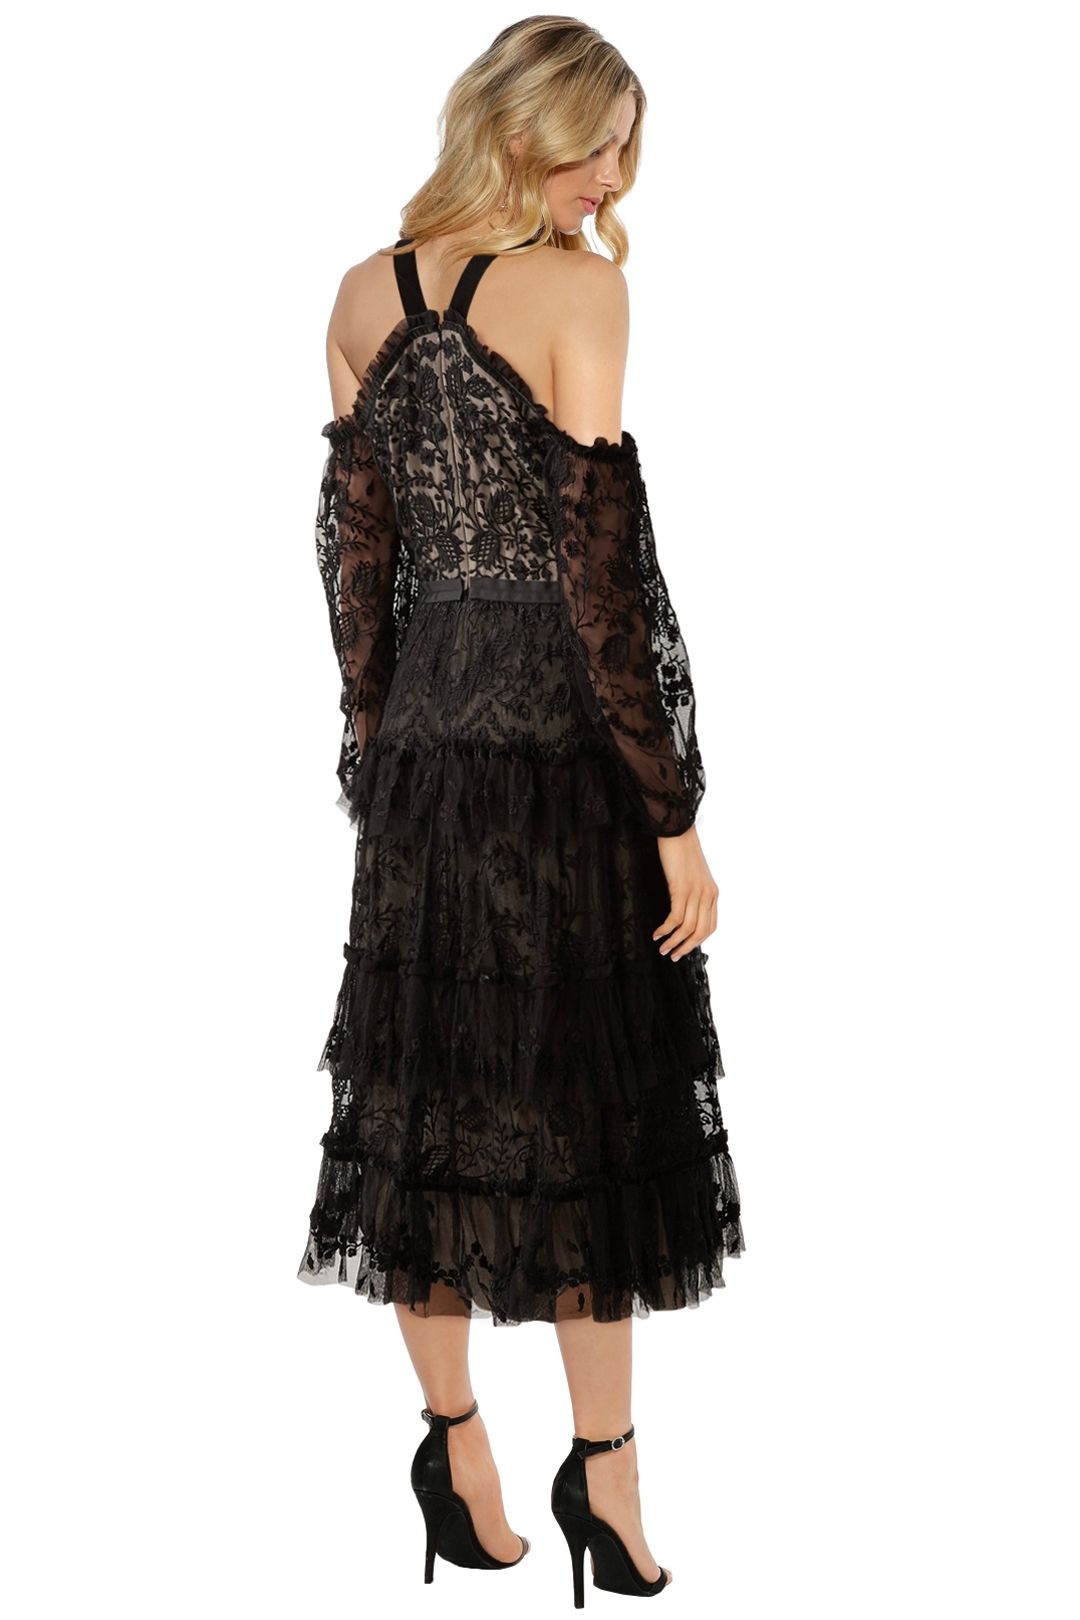 Needle & Thread - Primrose Dress - Black Lace - Back